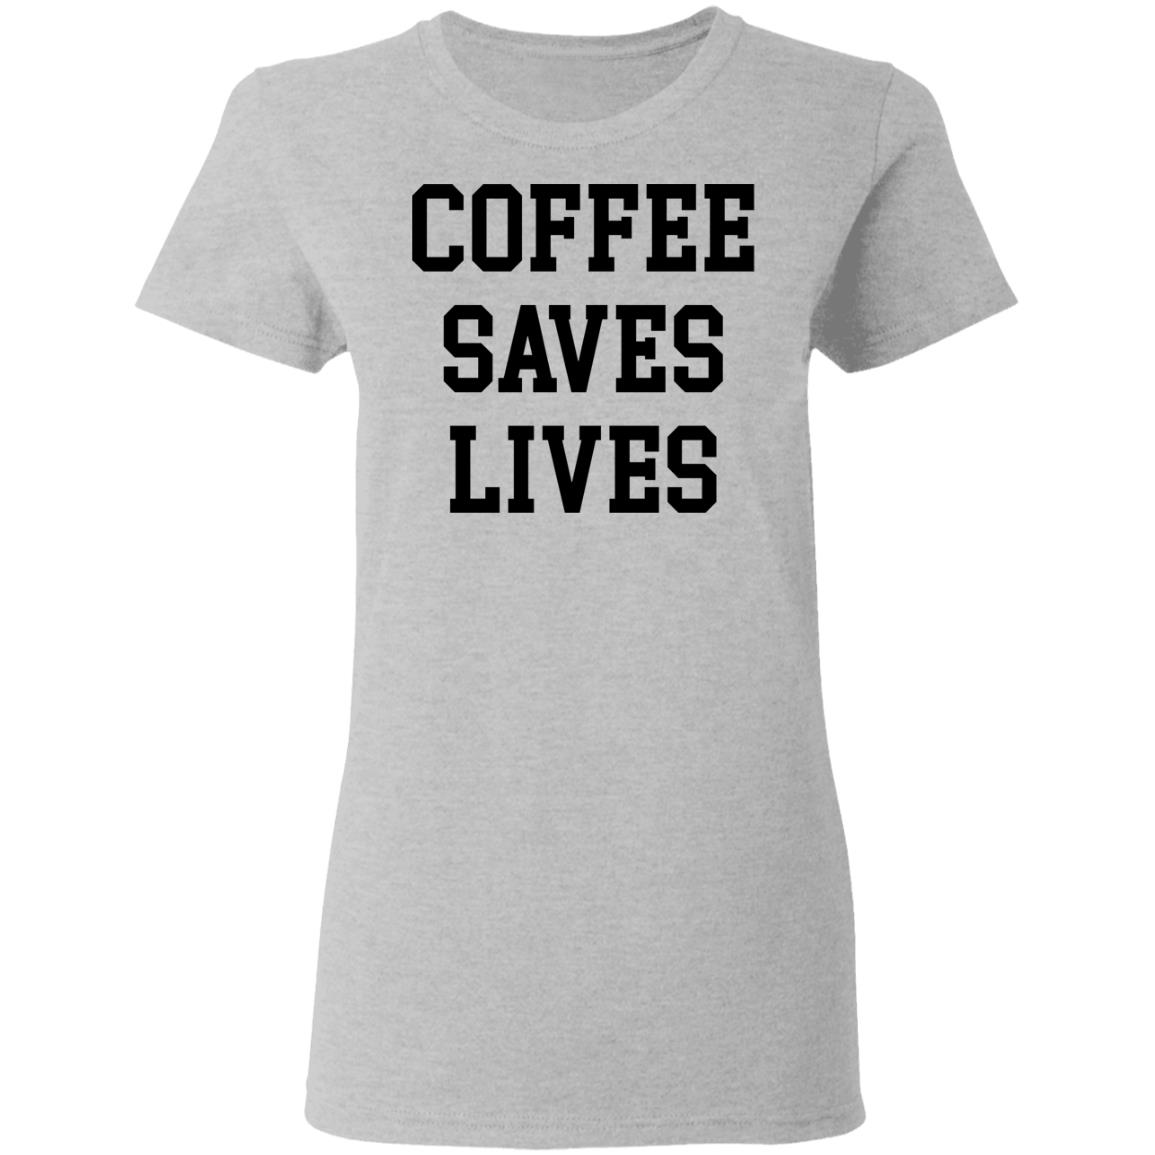 Download Coffee saves lives shirt - Rockatee